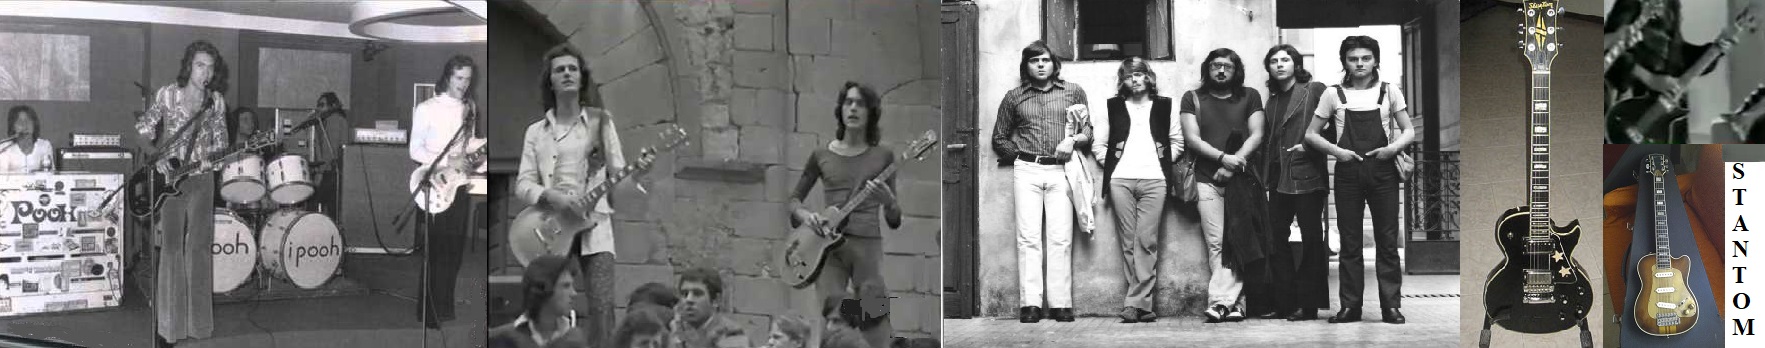 Stantom, chitarre e bassi anni  70s!